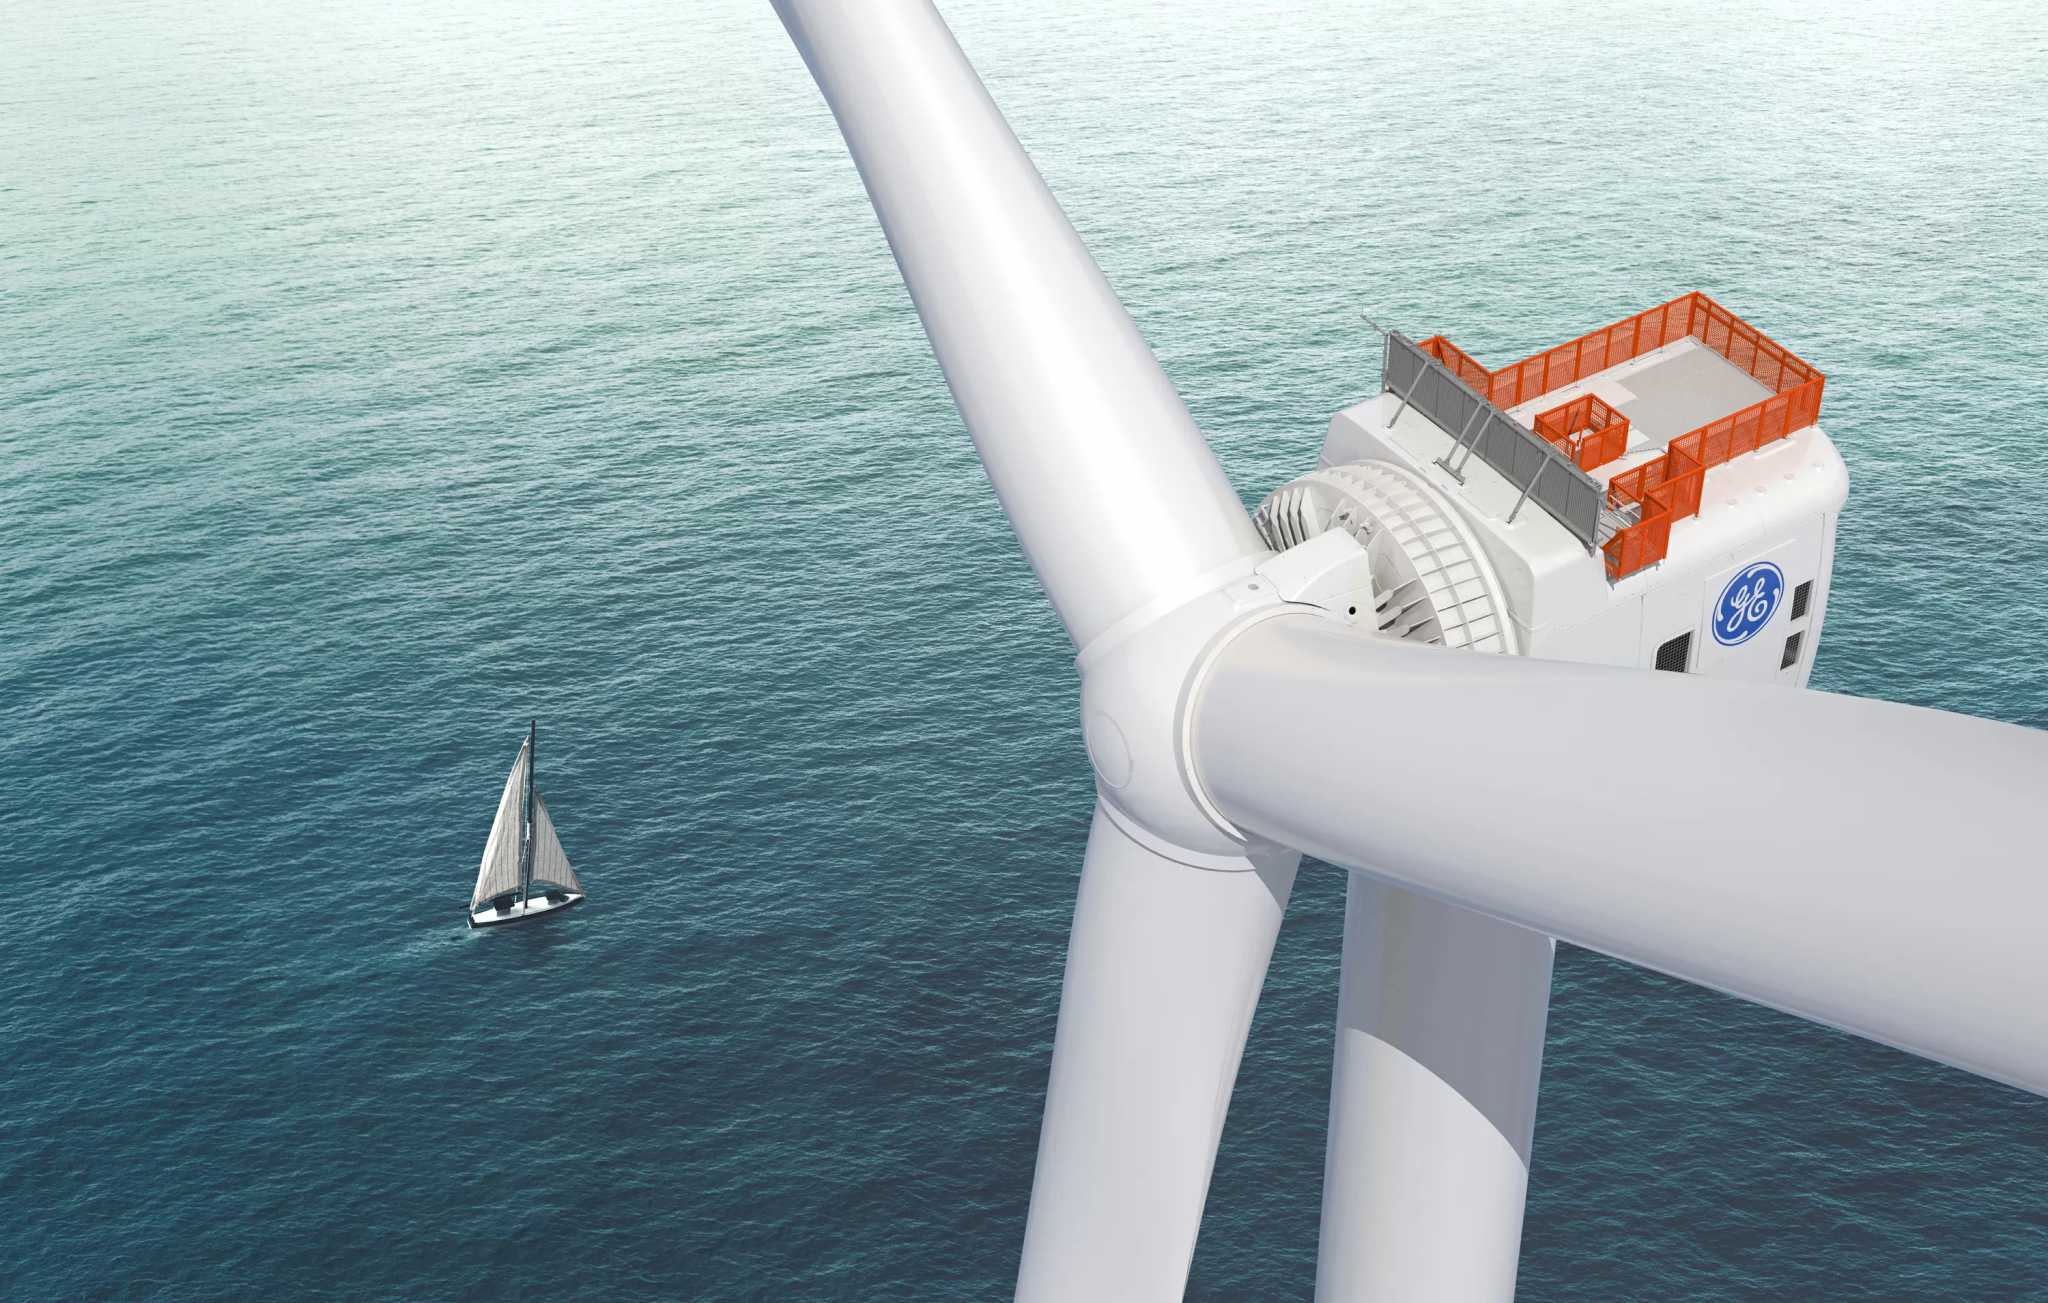 GE wins $20 million federal grant to develop new wind turbine generators